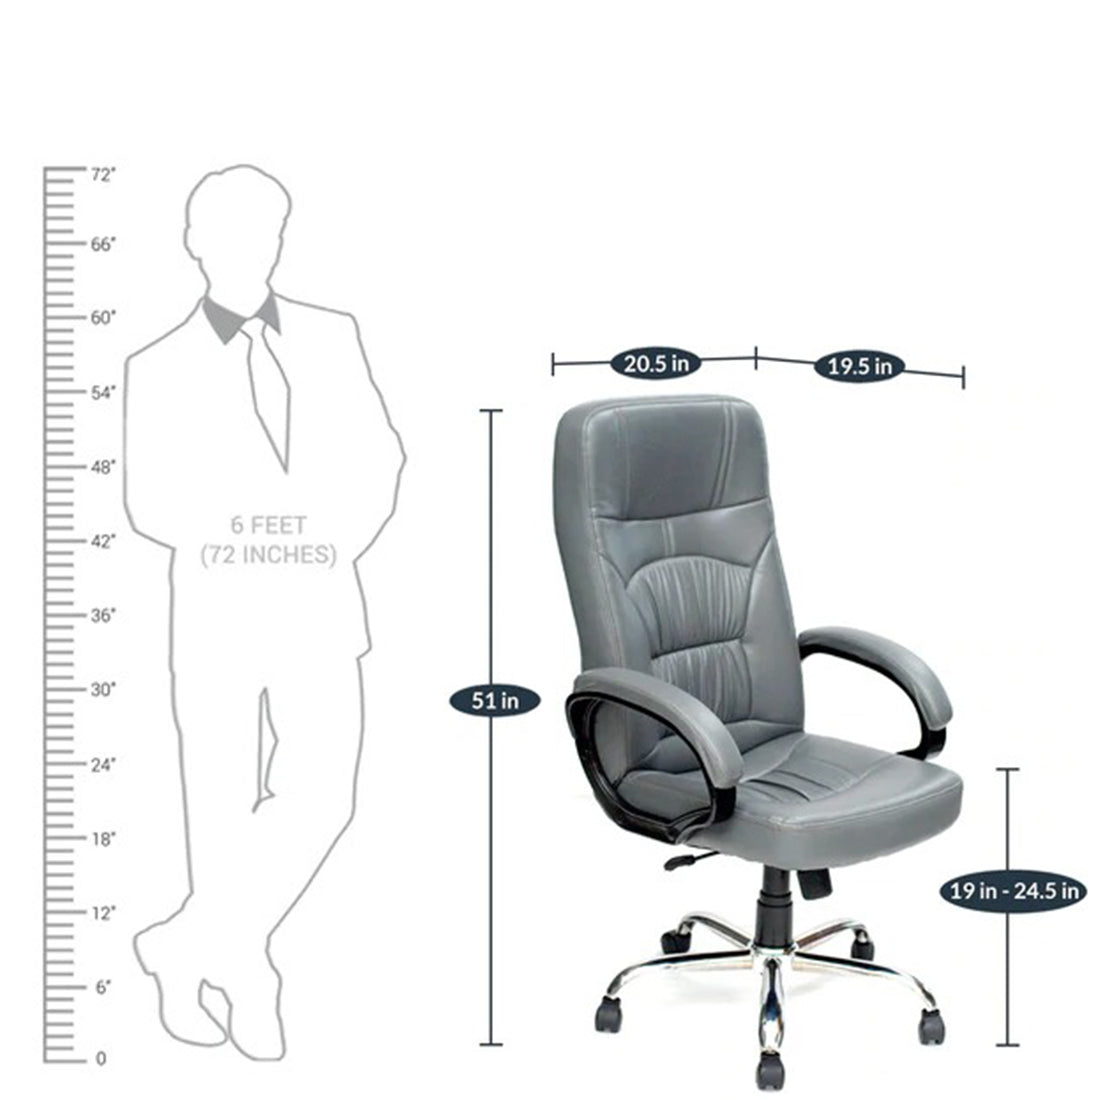 Detec™ High Back Executive Chair - Grey Color